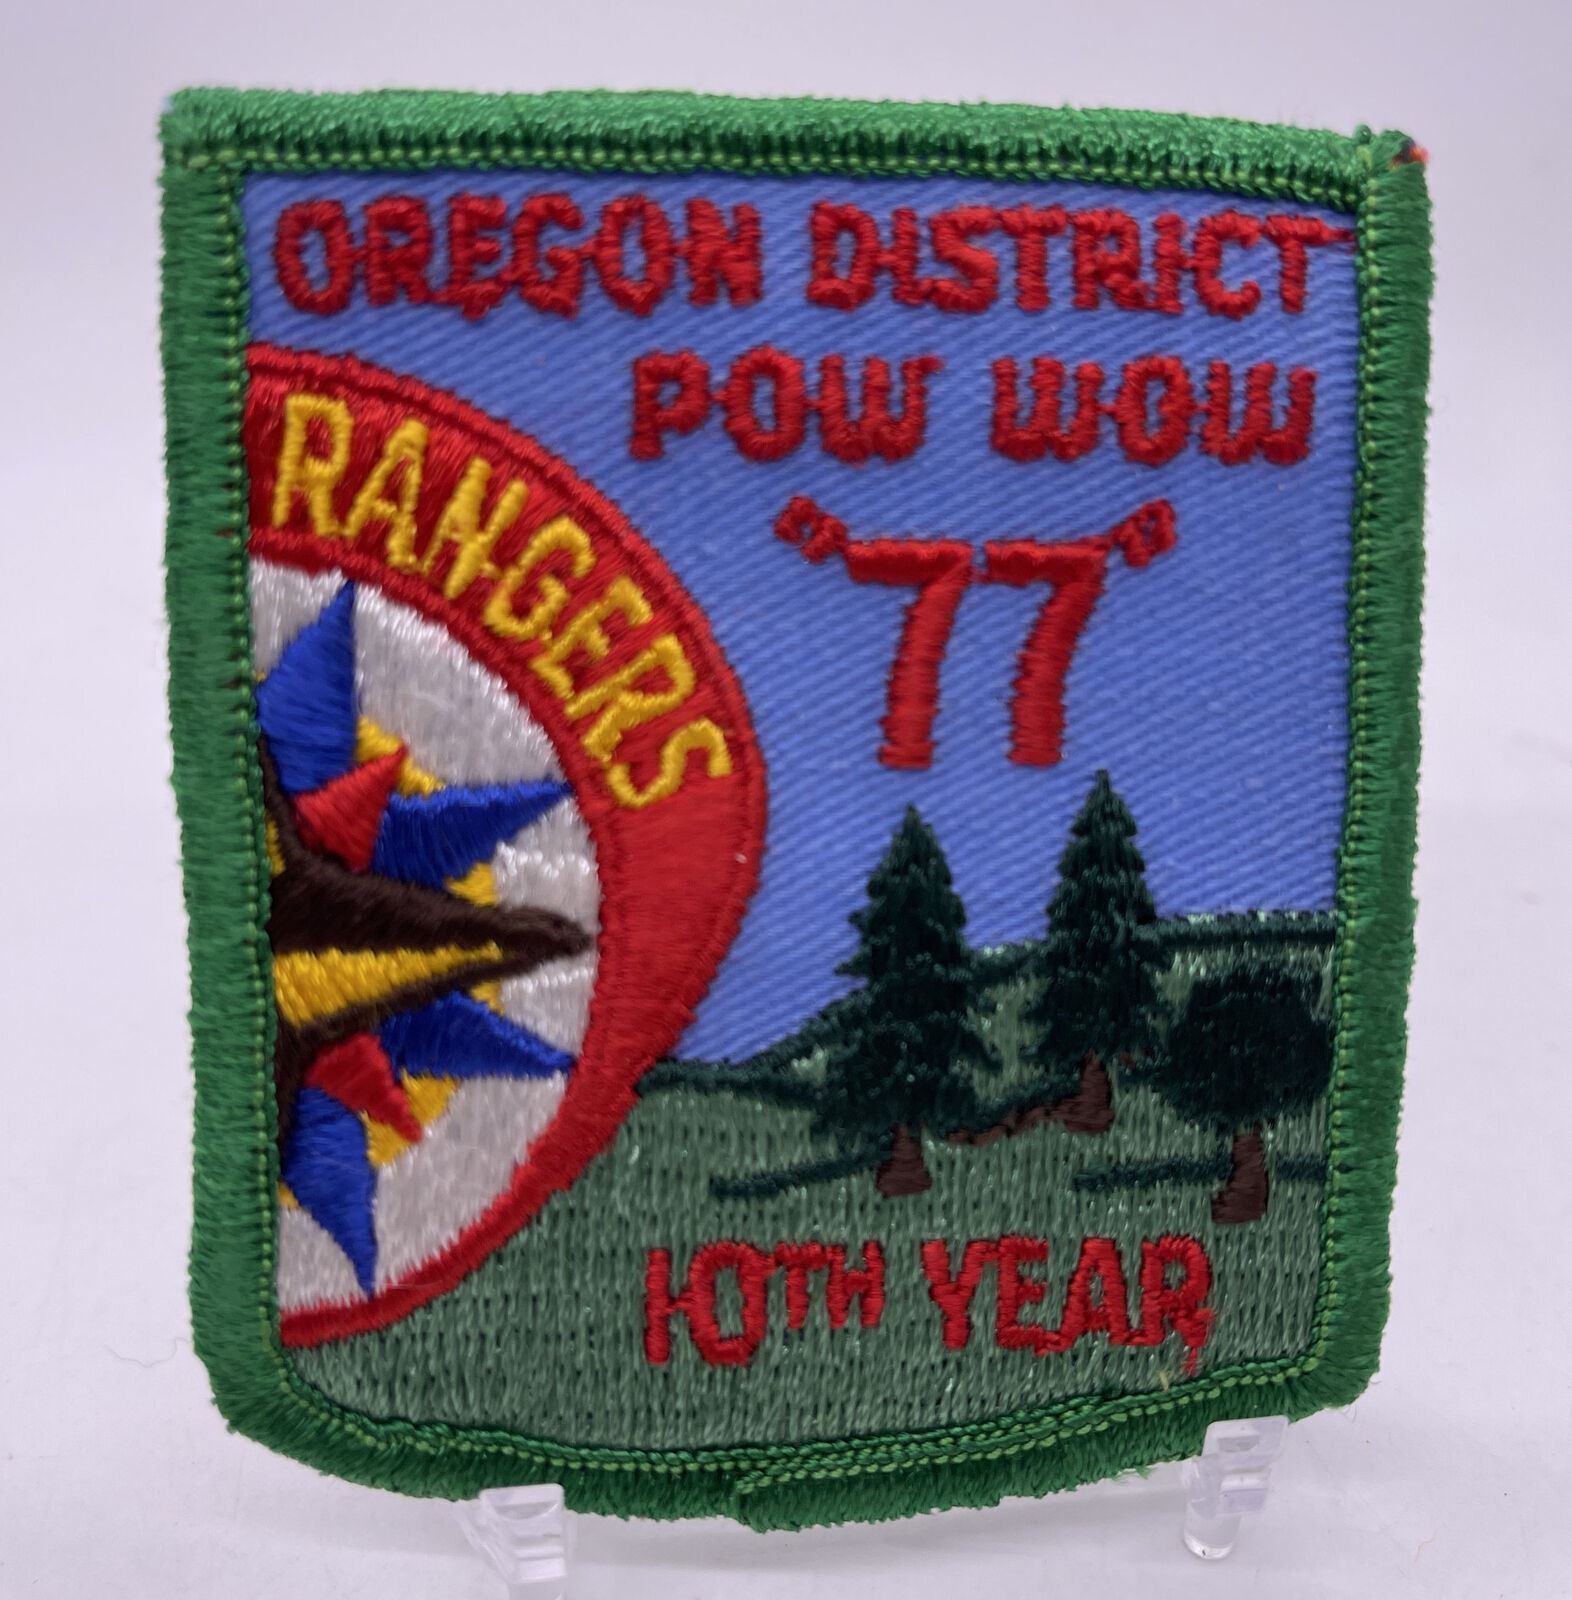 Vintage Royal Rangers Patch Oregon District Pow Wow "77" 10th Year Patch